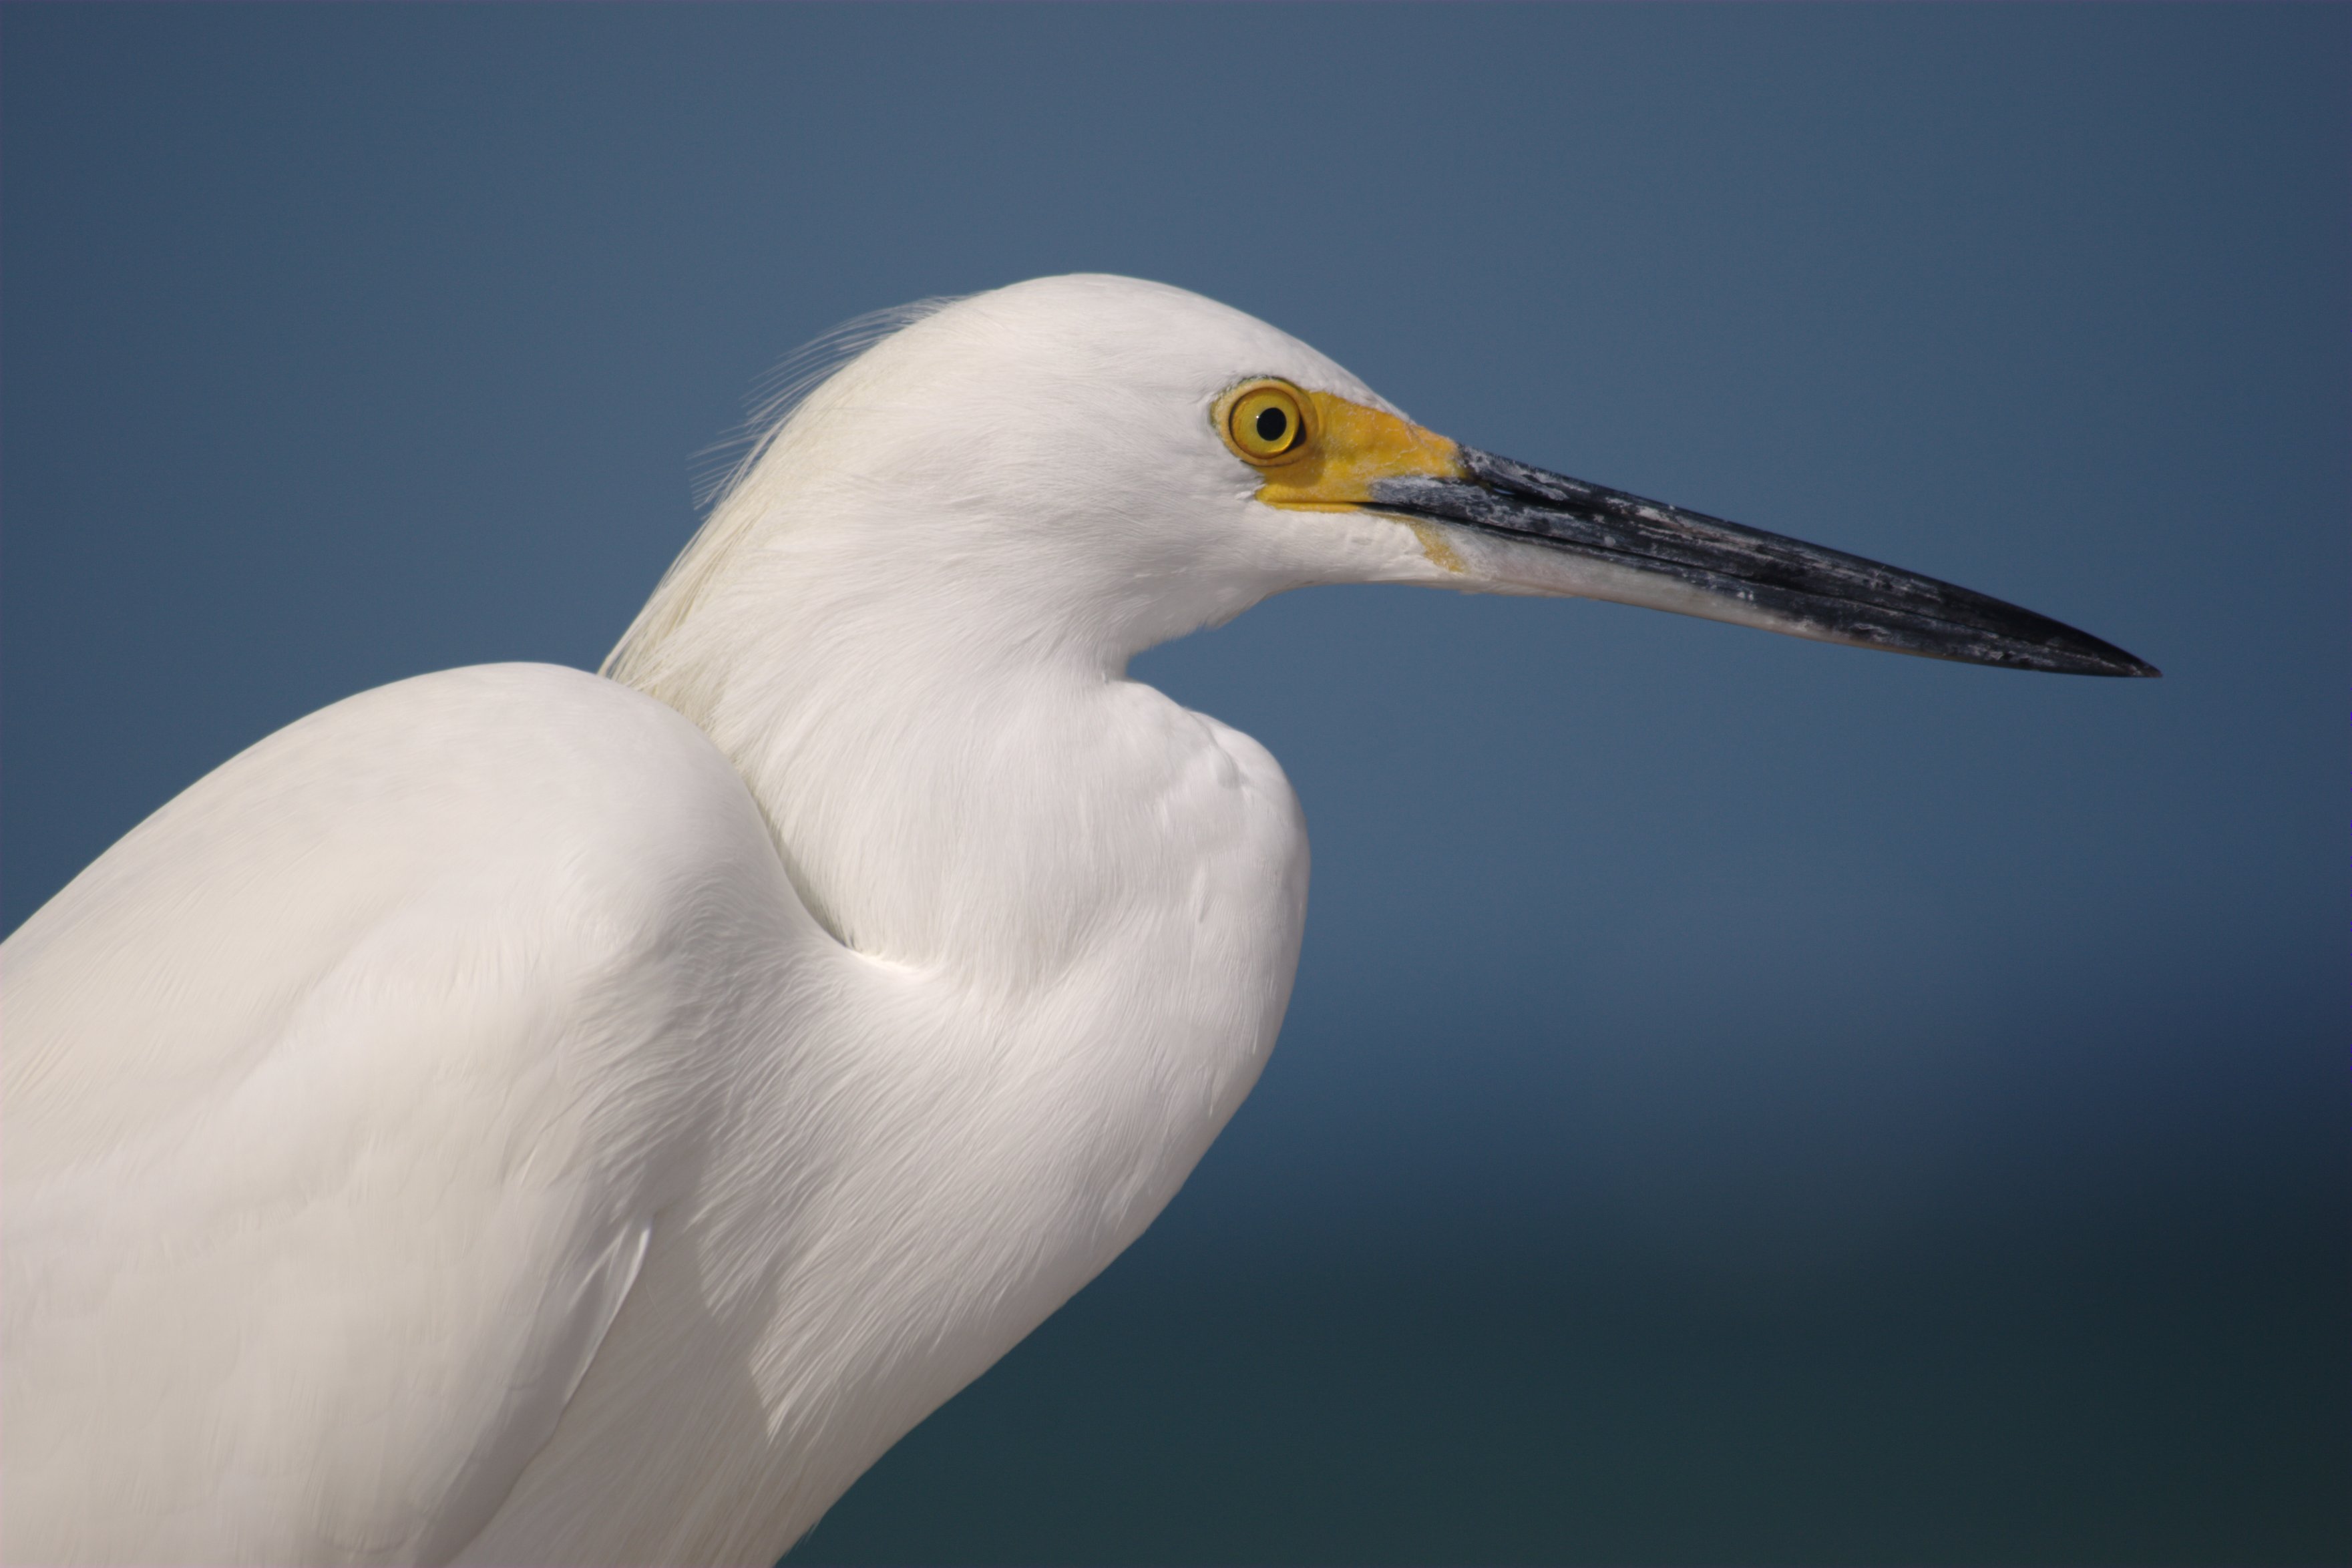 File:Snowy-egret-profile.jpg - Wikimedia Commons